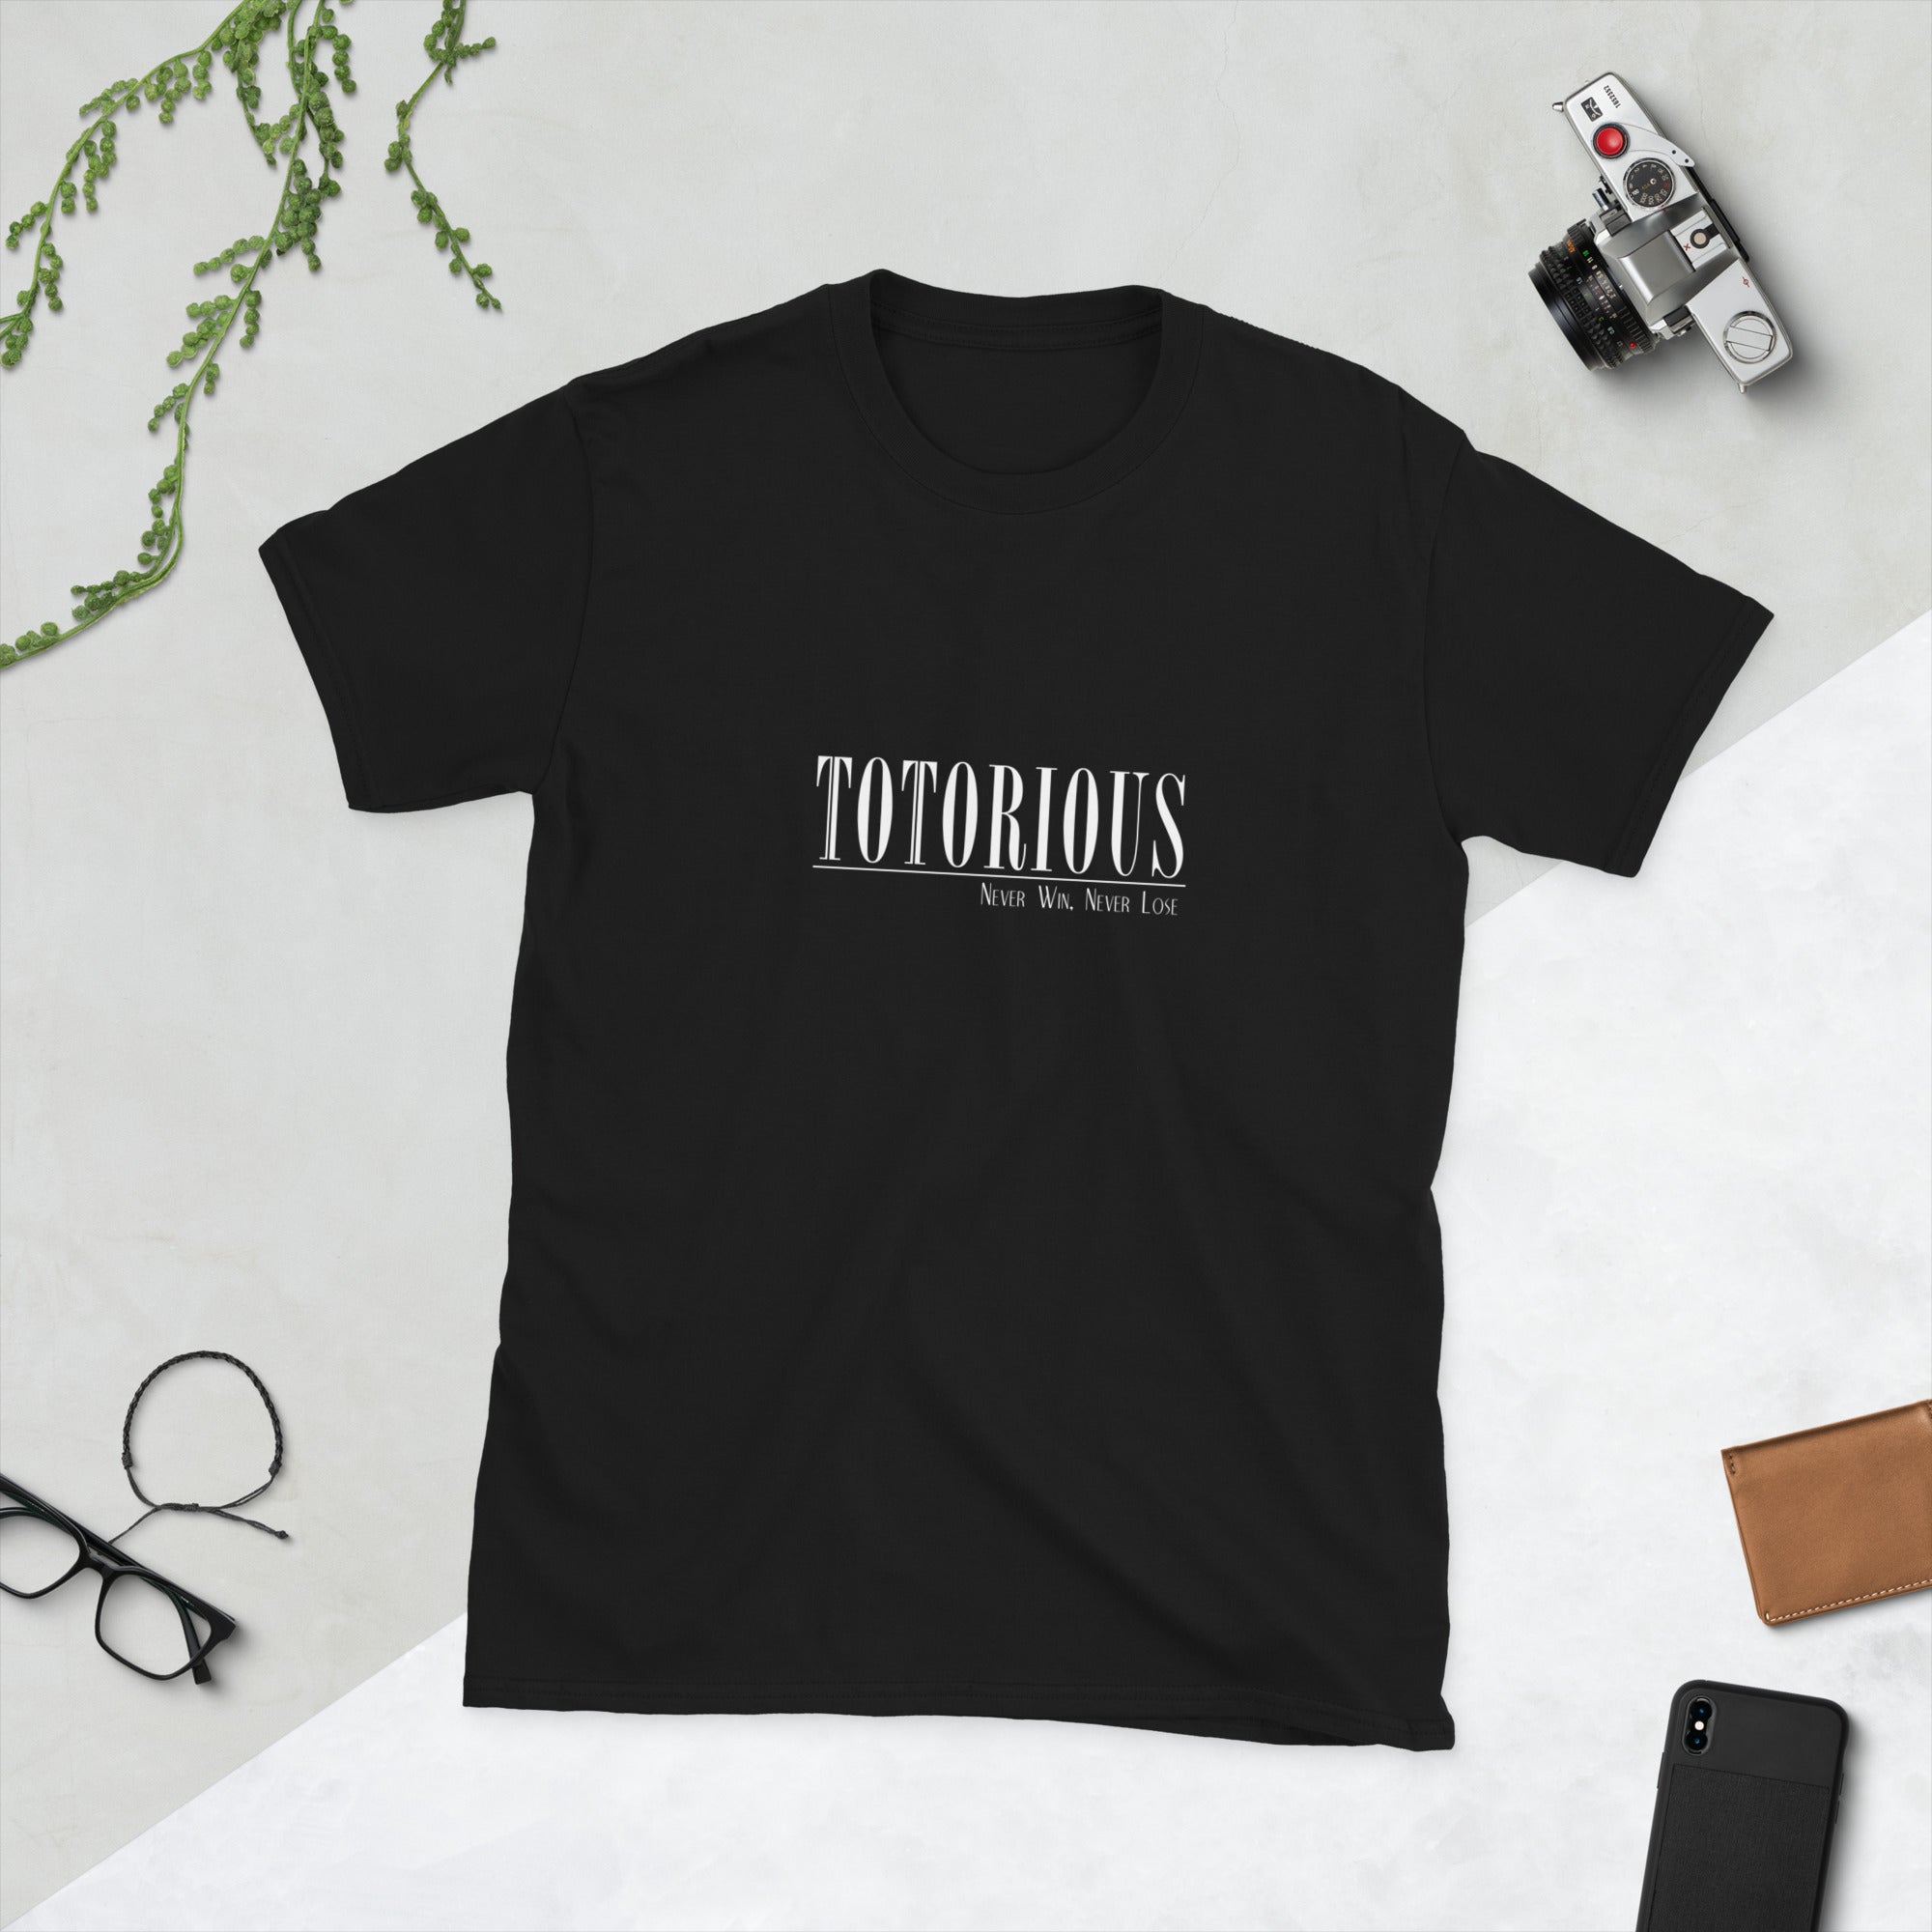 Totorious Original Unisex T-Shirt